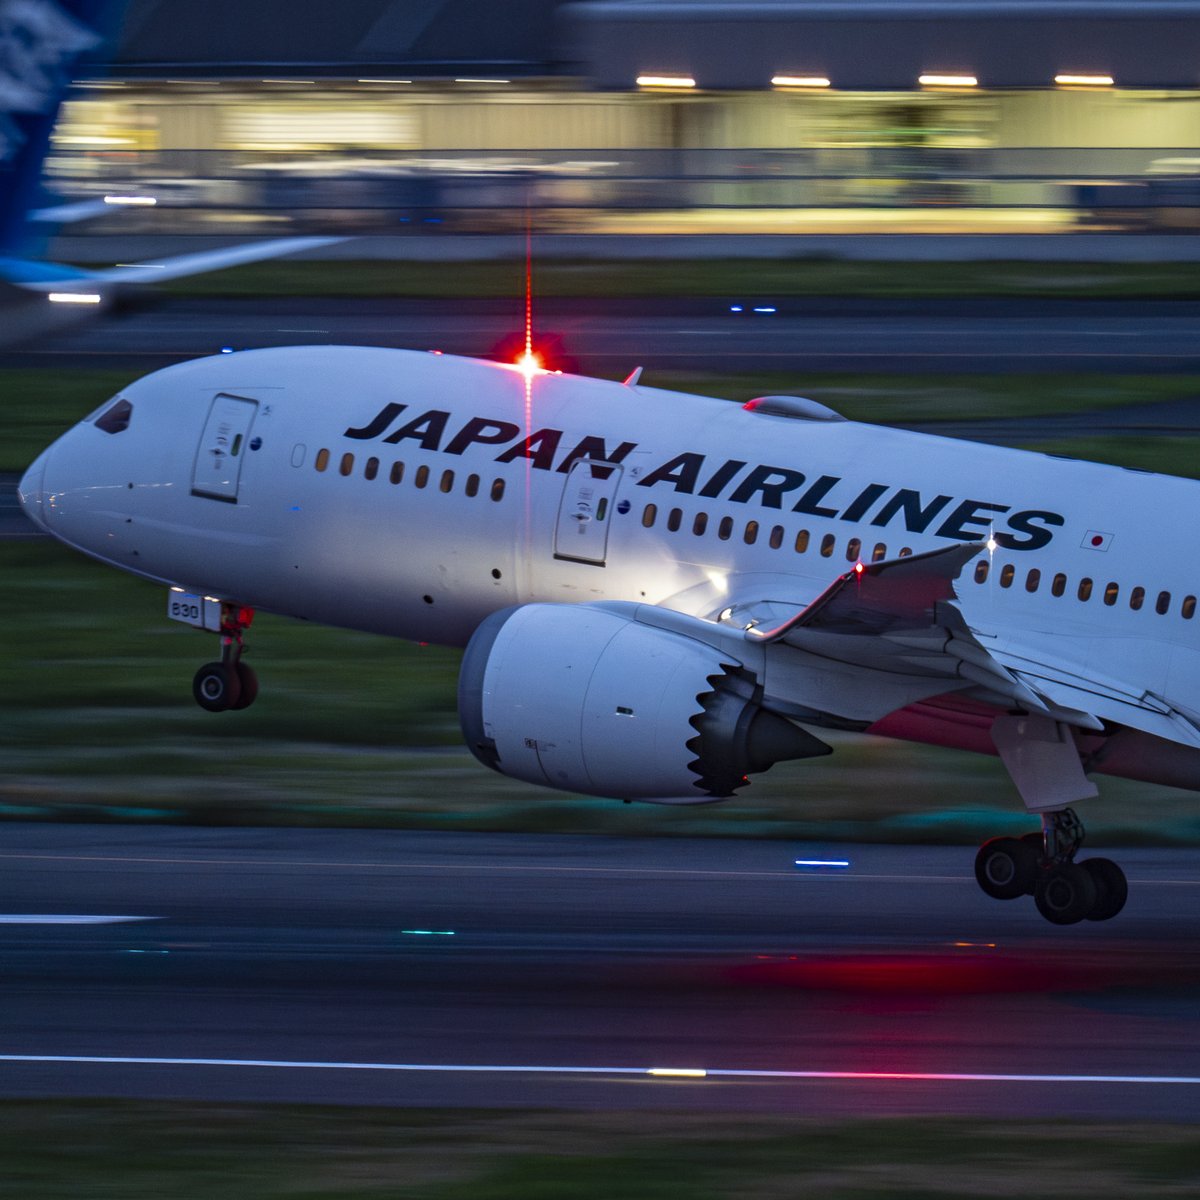 ★JAL B787✈️
✨ブルーモーメントへダイブ！✨
#羽田 #羽田空港 #飛行機 #飛行機写真 #ヒコーキ #JAL #ana